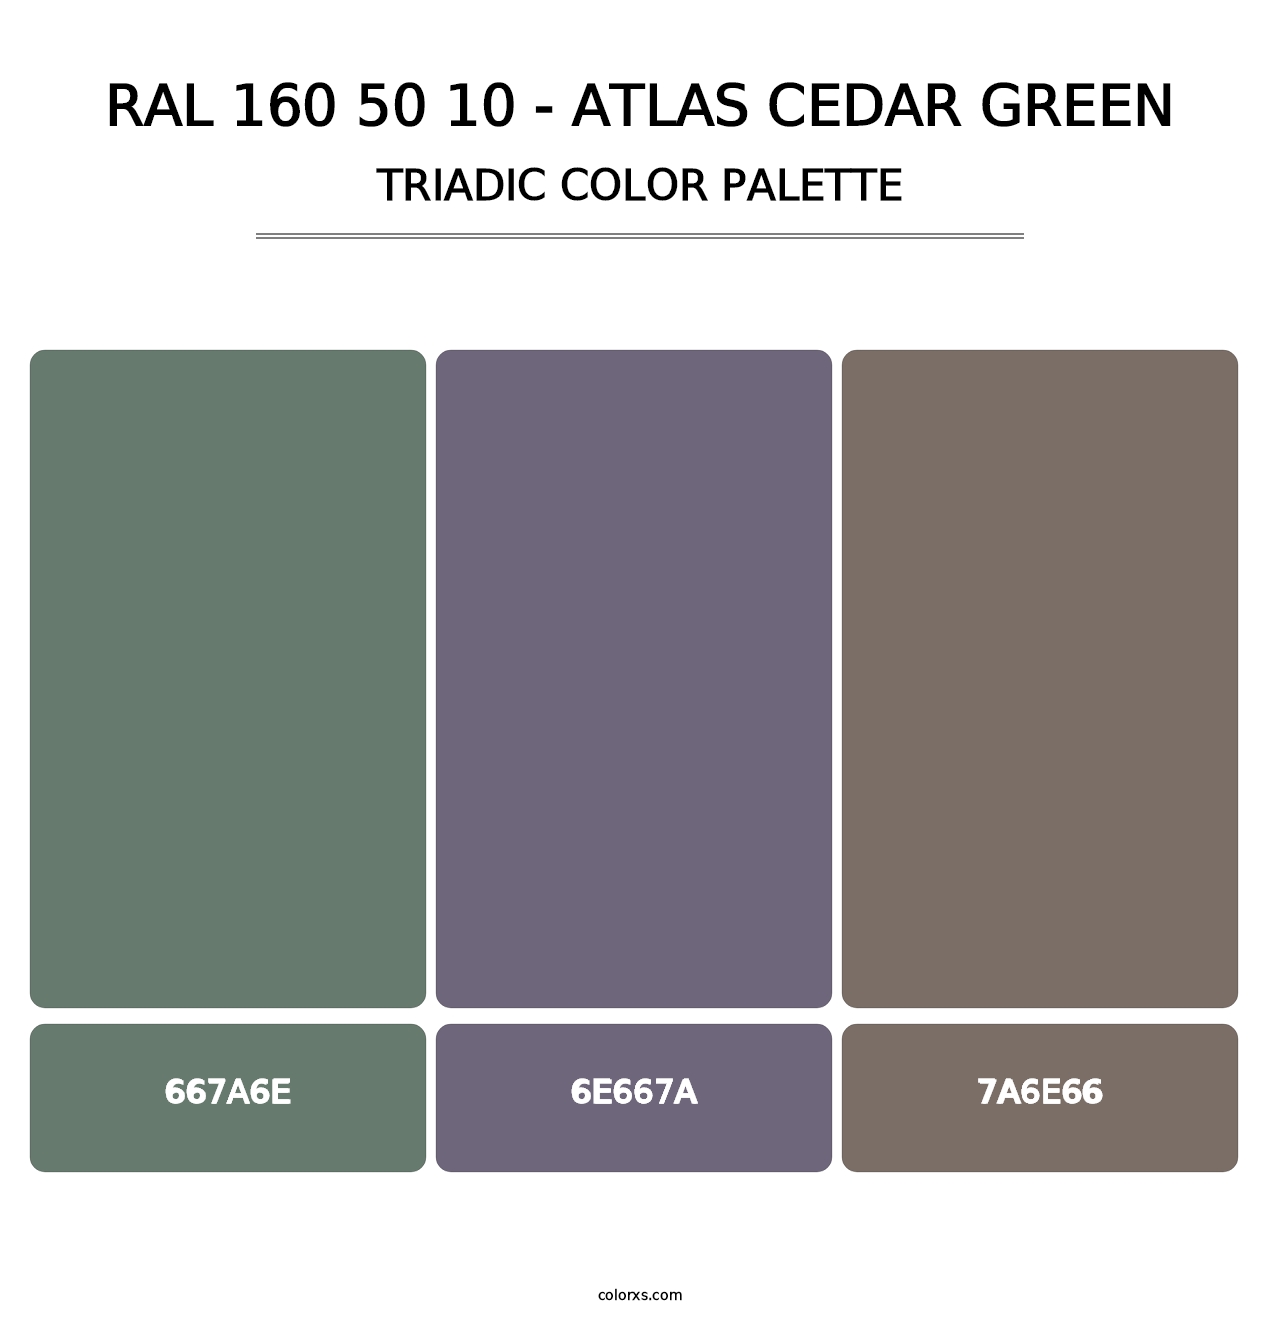 RAL 160 50 10 - Atlas Cedar Green - Triadic Color Palette